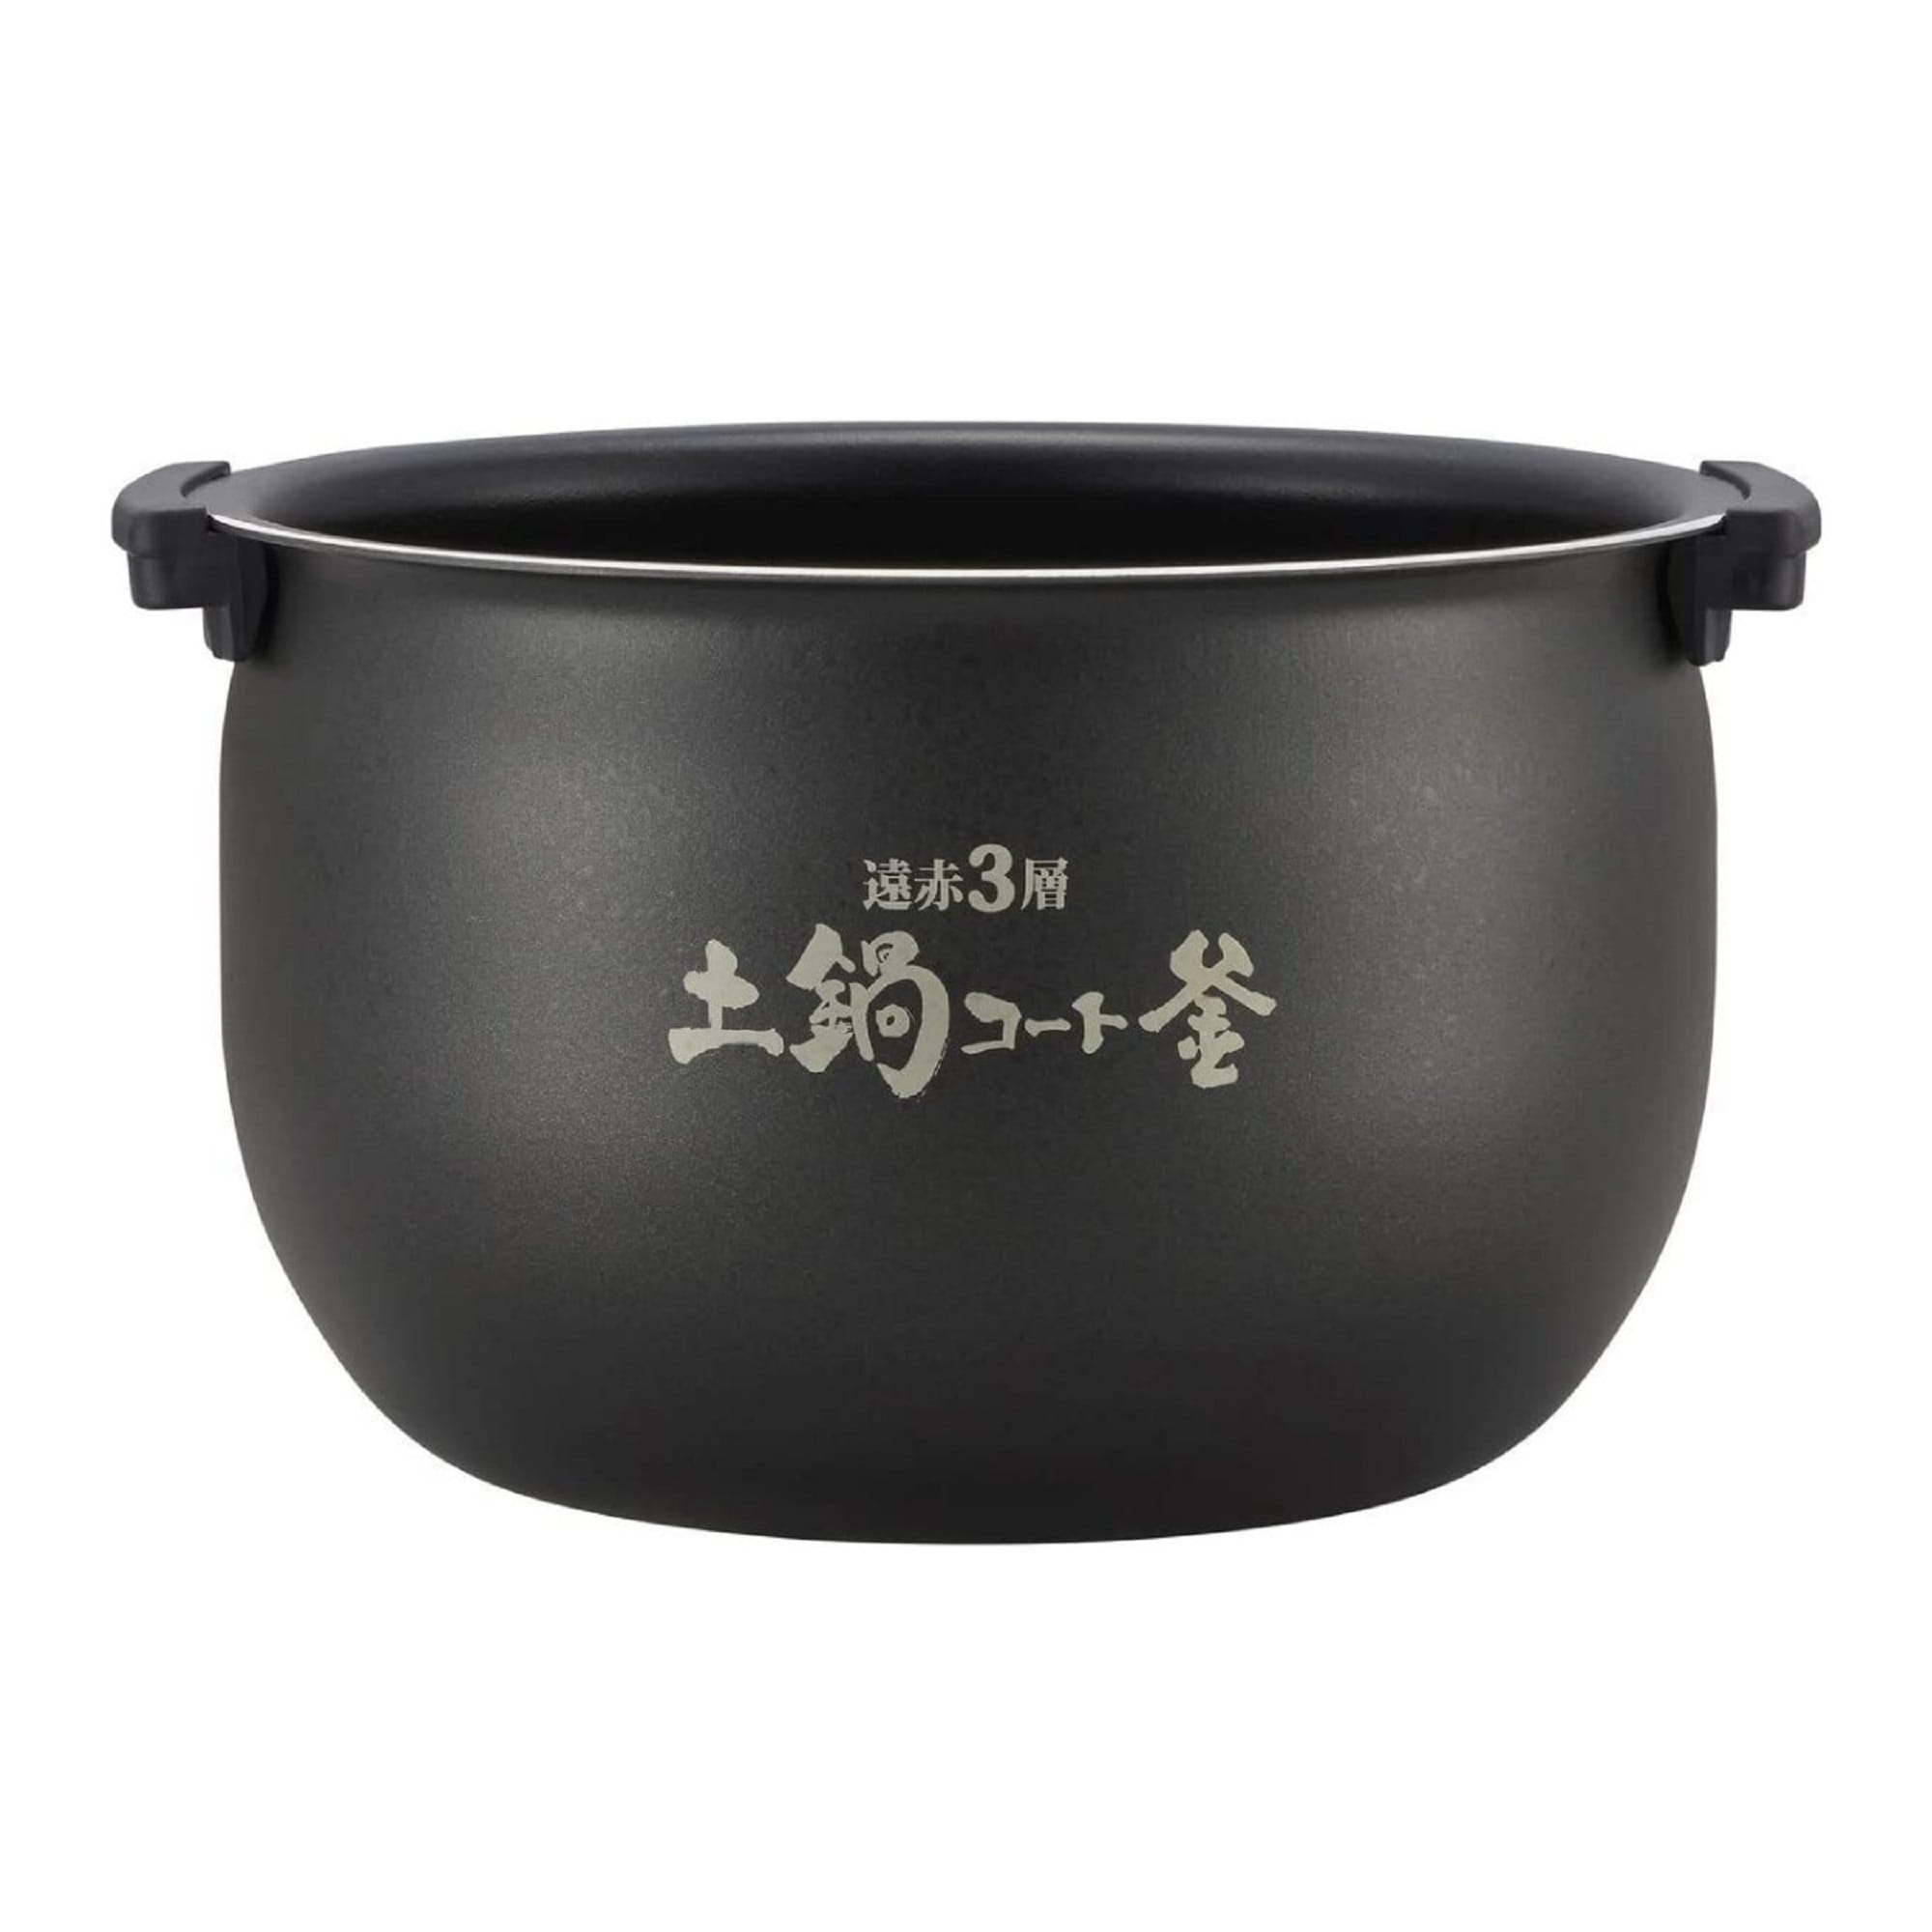 Tiger JKT-D18U 10-Cup Induction Rice Cooker (Black & Stainless Steel) - Bed  Bath & Beyond - 37638791